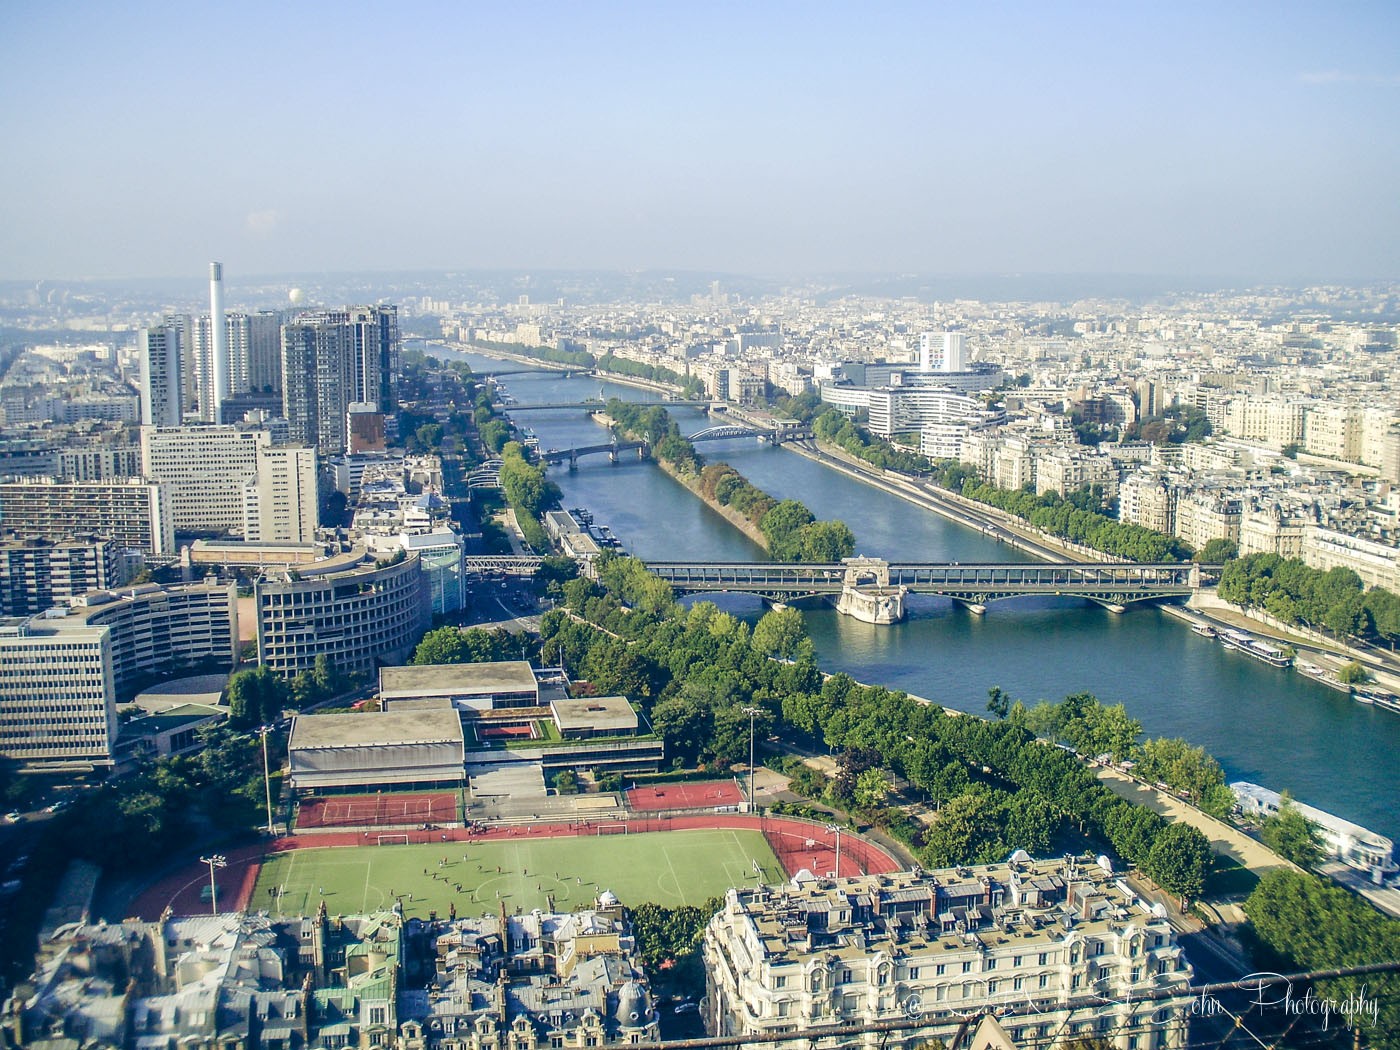 River Seine. Paris. France. Europe